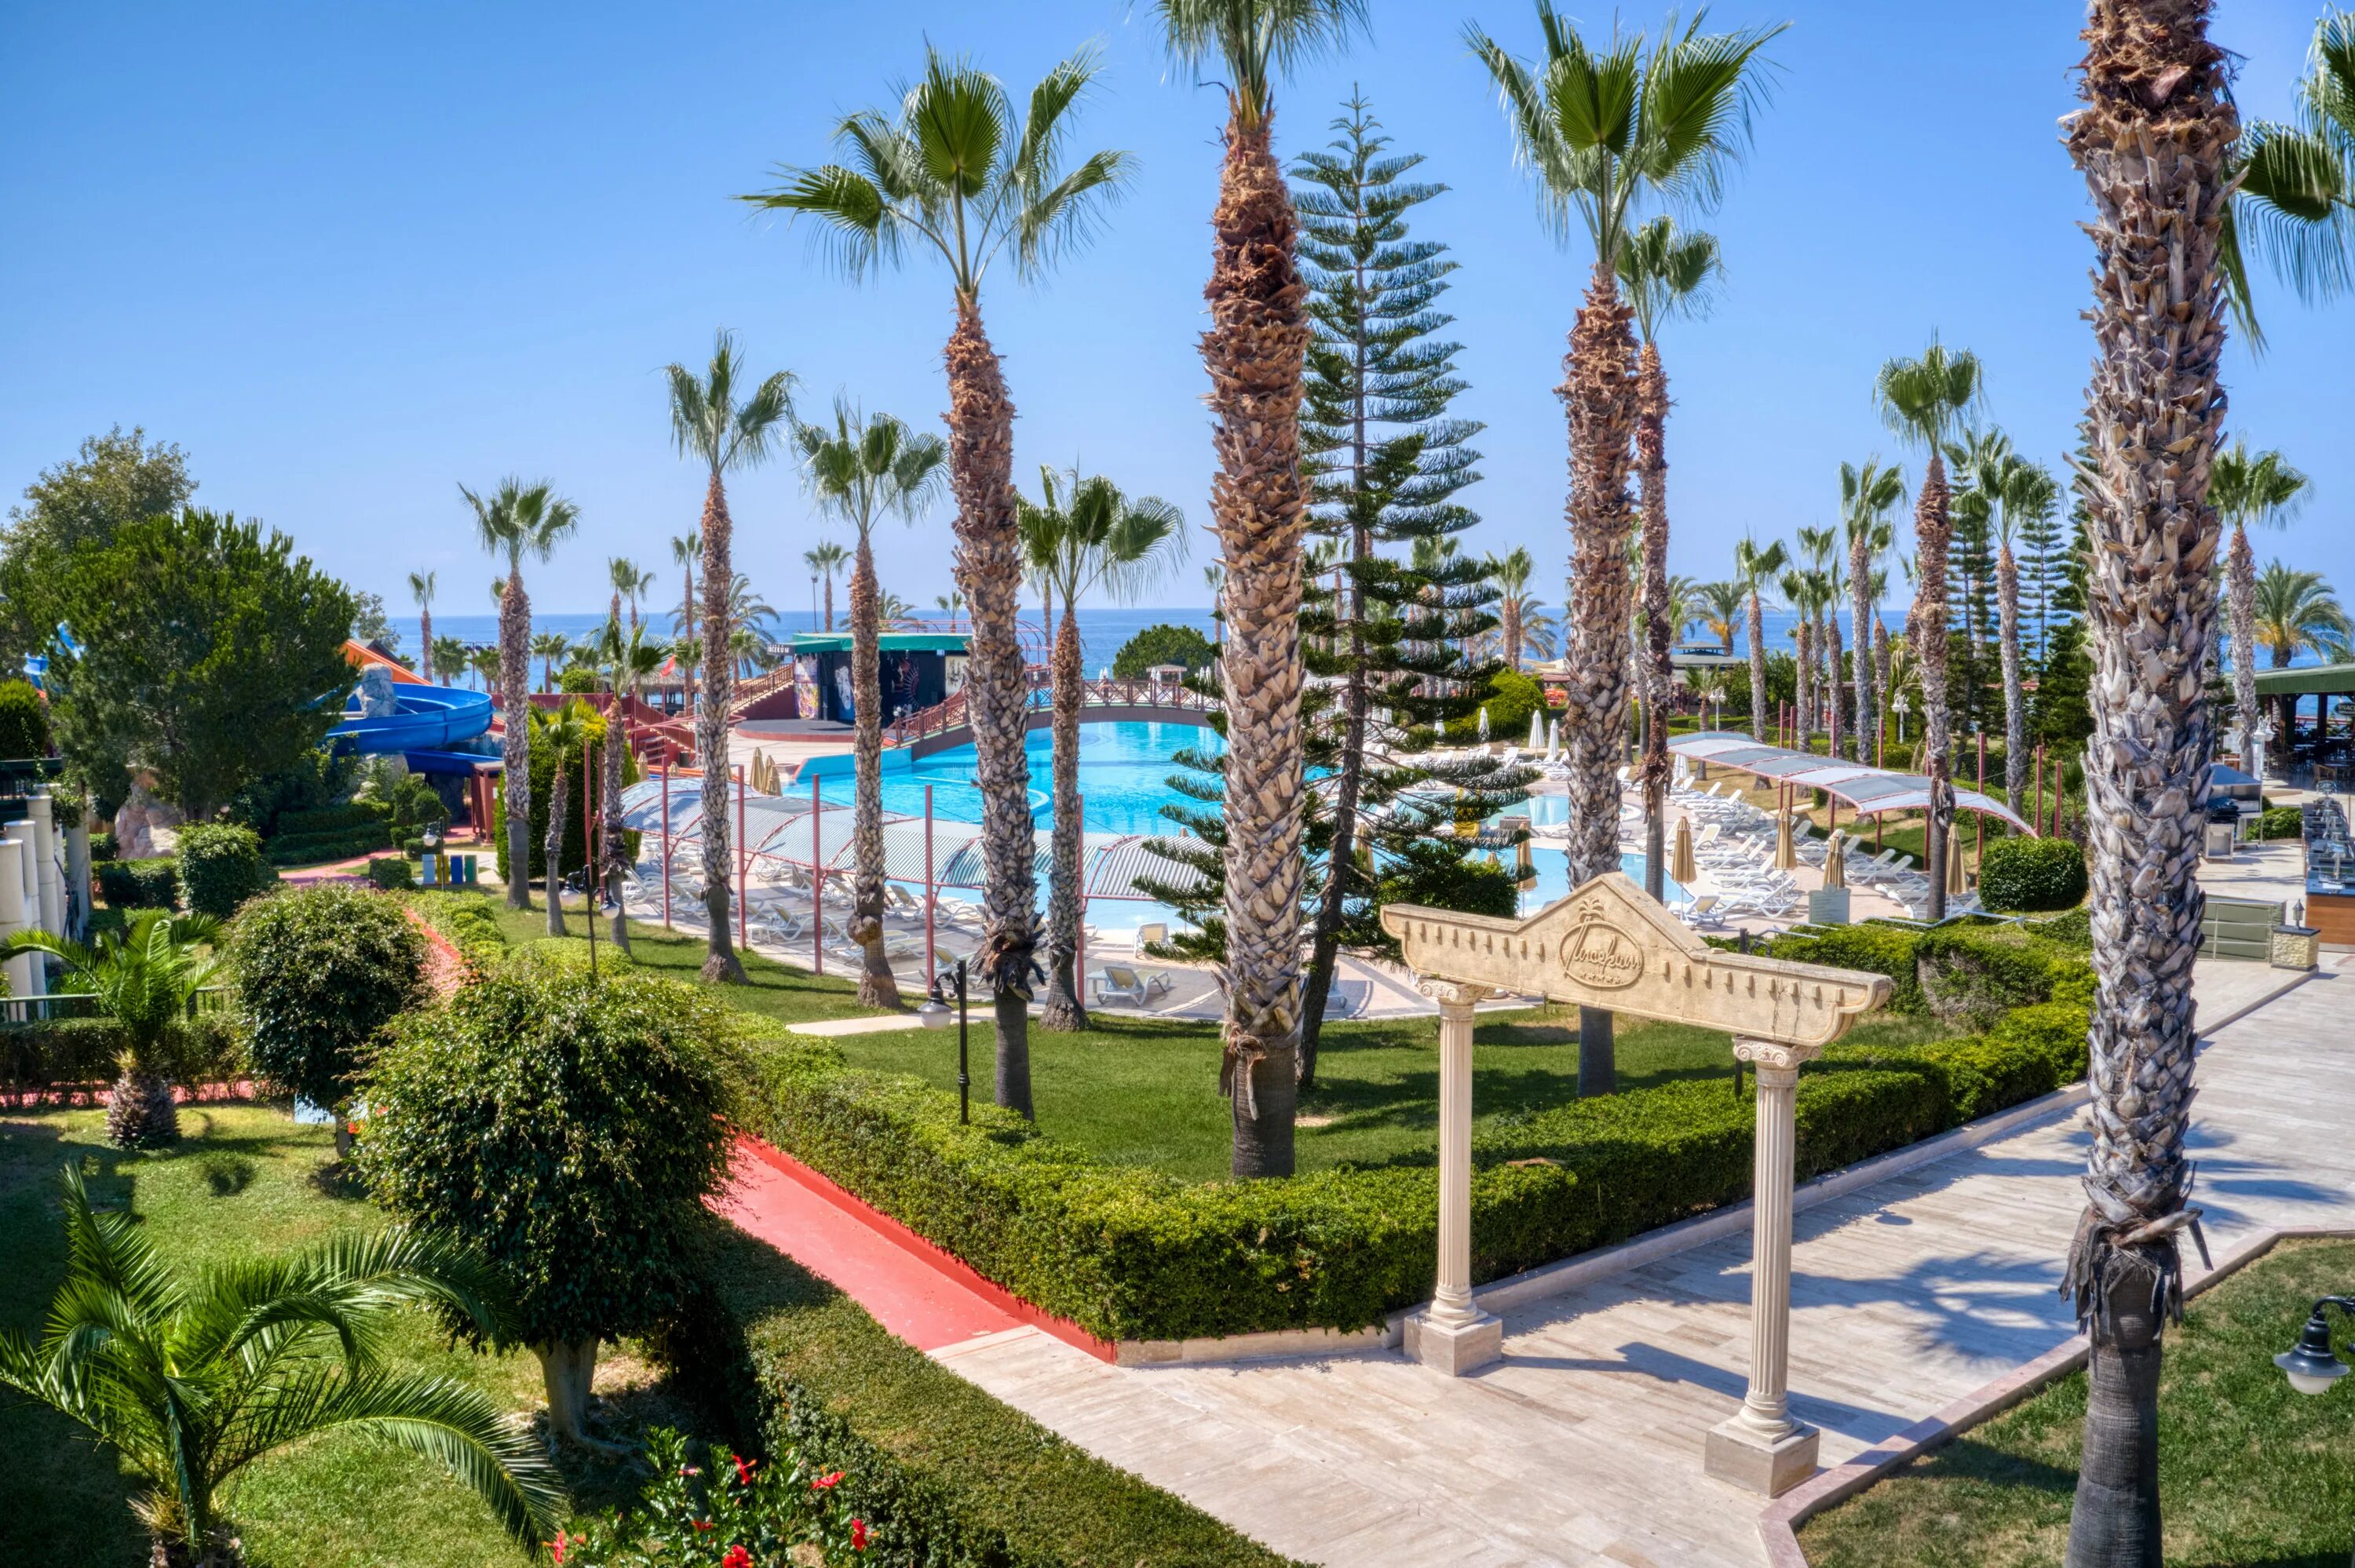 Отель Турция Incekum Beach Resort. Oz Hotels Incekum Beach Hotel 5. Инжекум Ресорт Бич Аланья. Турция, Аланья, Инджекум. Incekum турция аланья